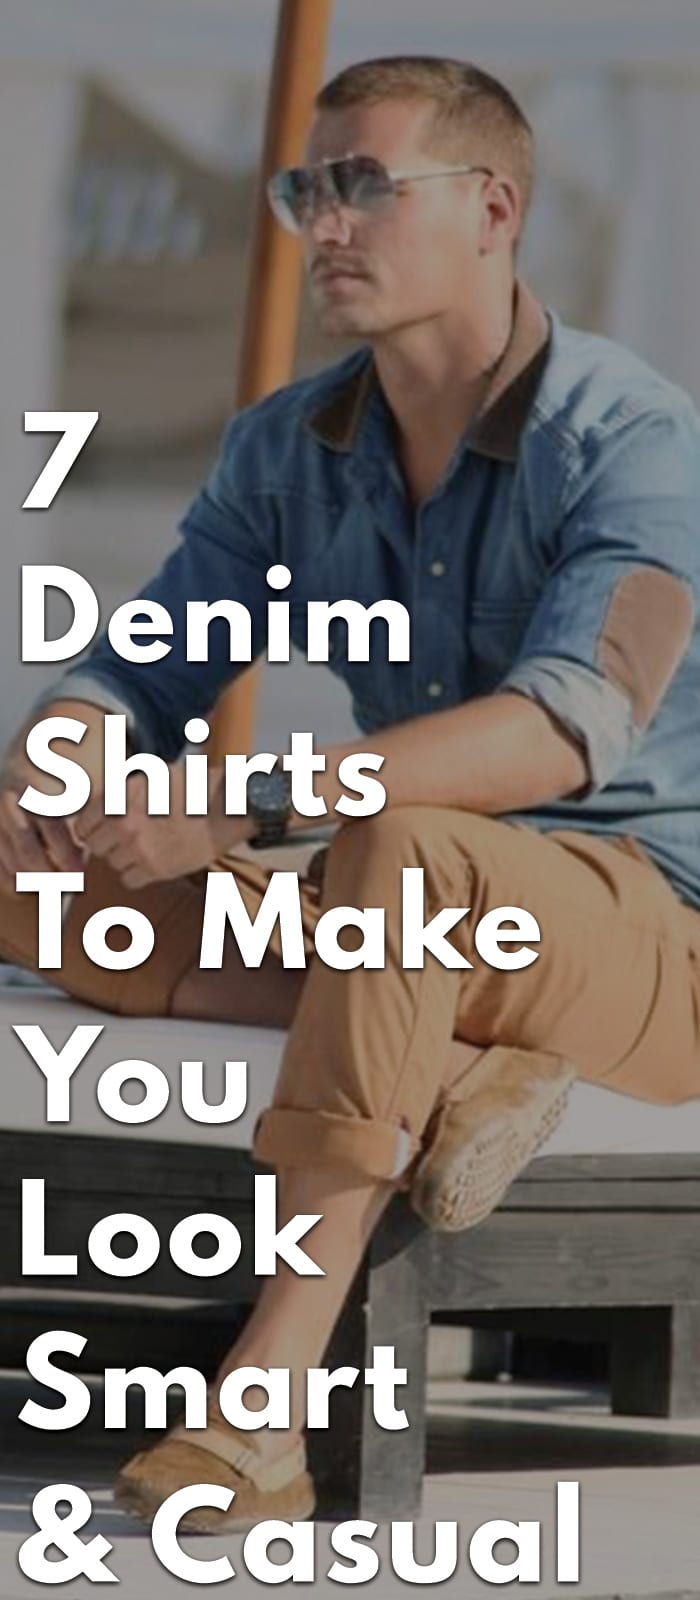 7-Denim-Shirts-To-Make-You-Look-Smart-&-Casual